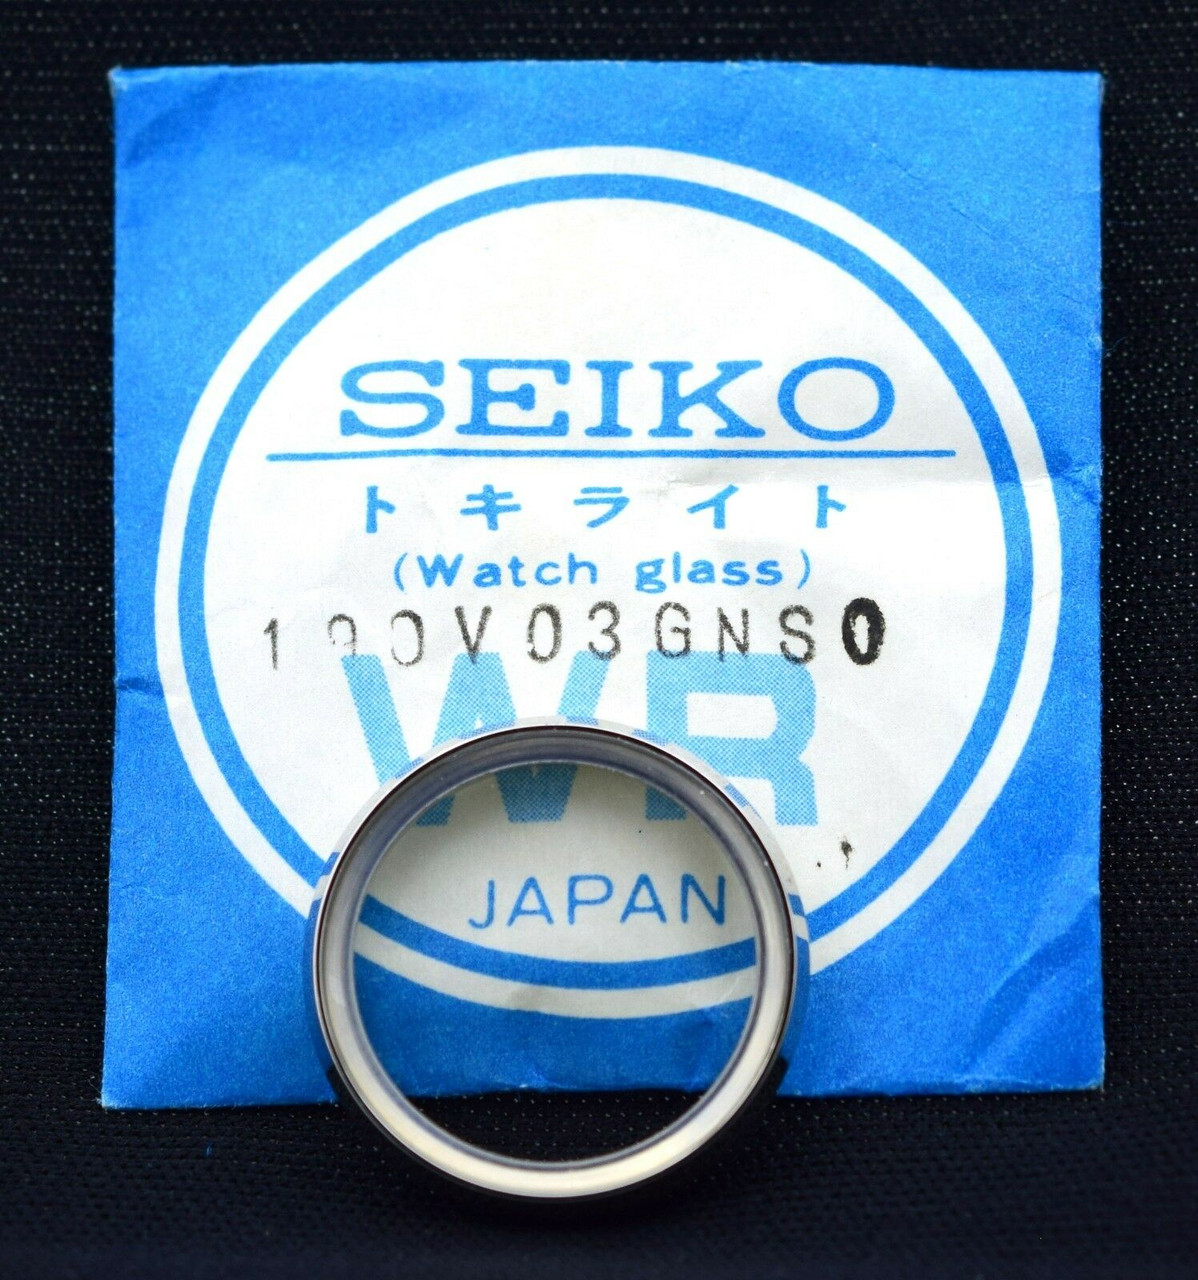 Seiko Watch Crystal 190V03GNS0